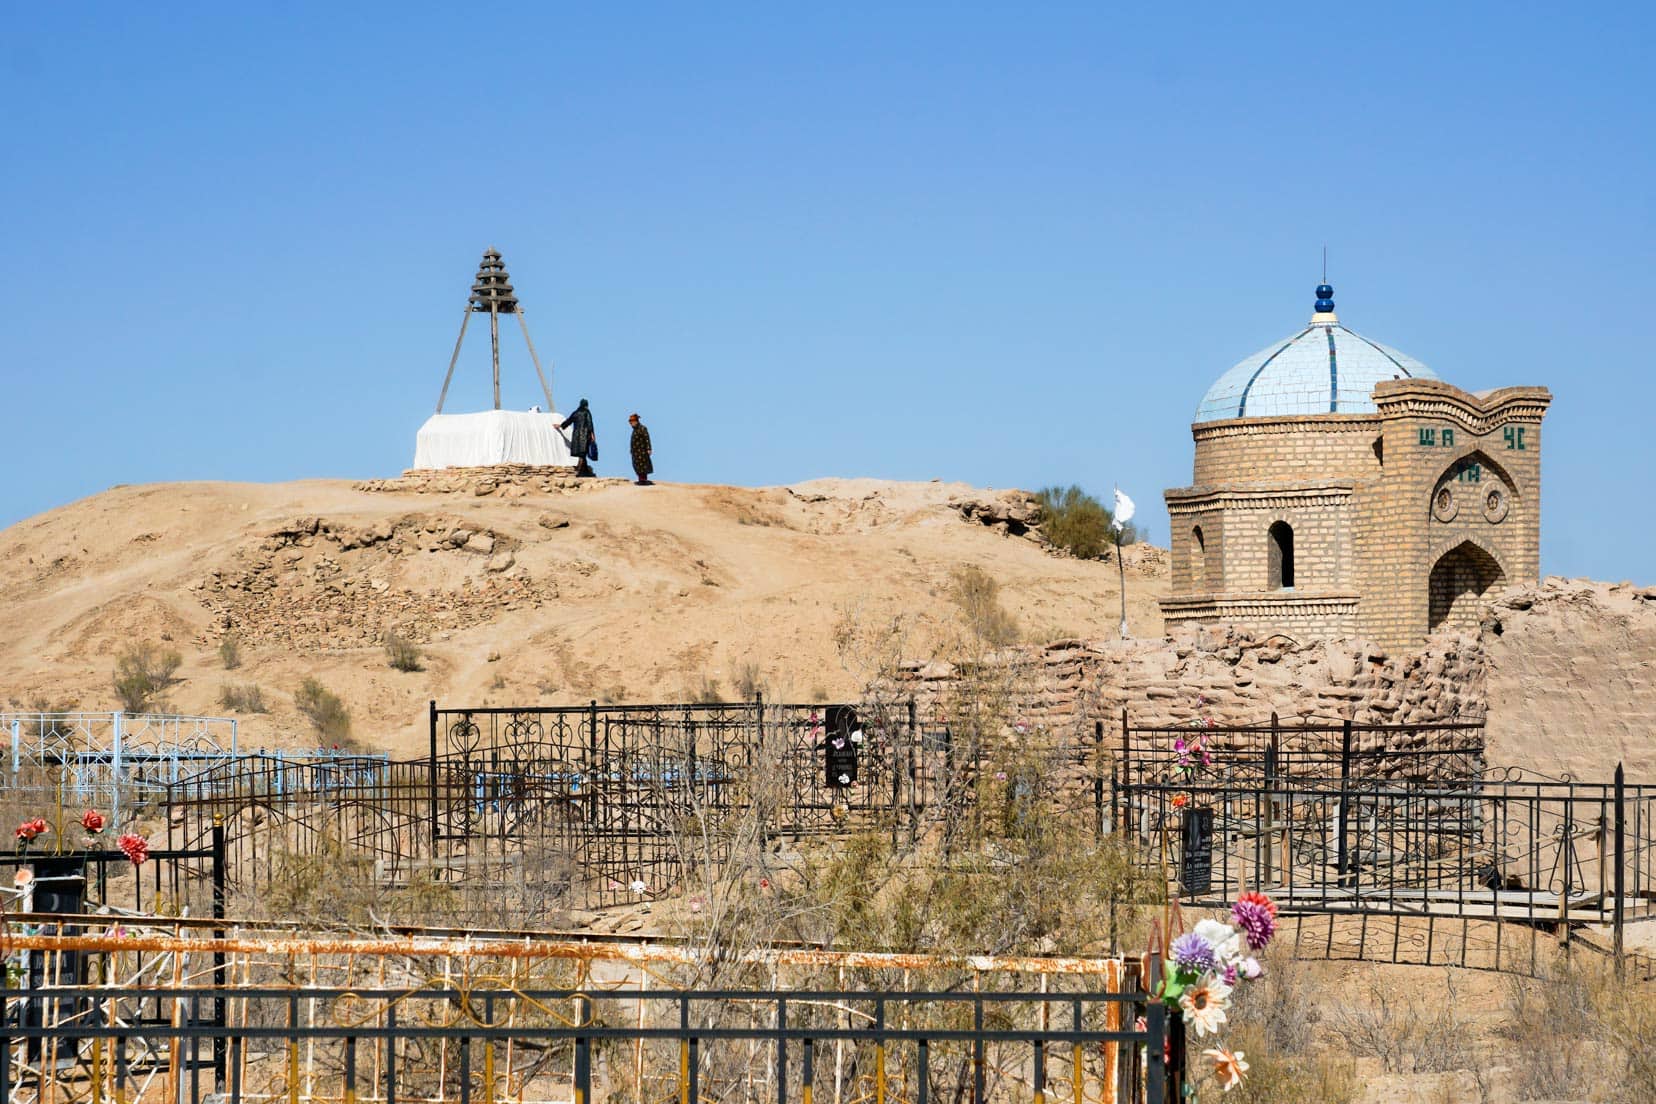 Jumart Qassap hillock in Mizdakhan Cemetery